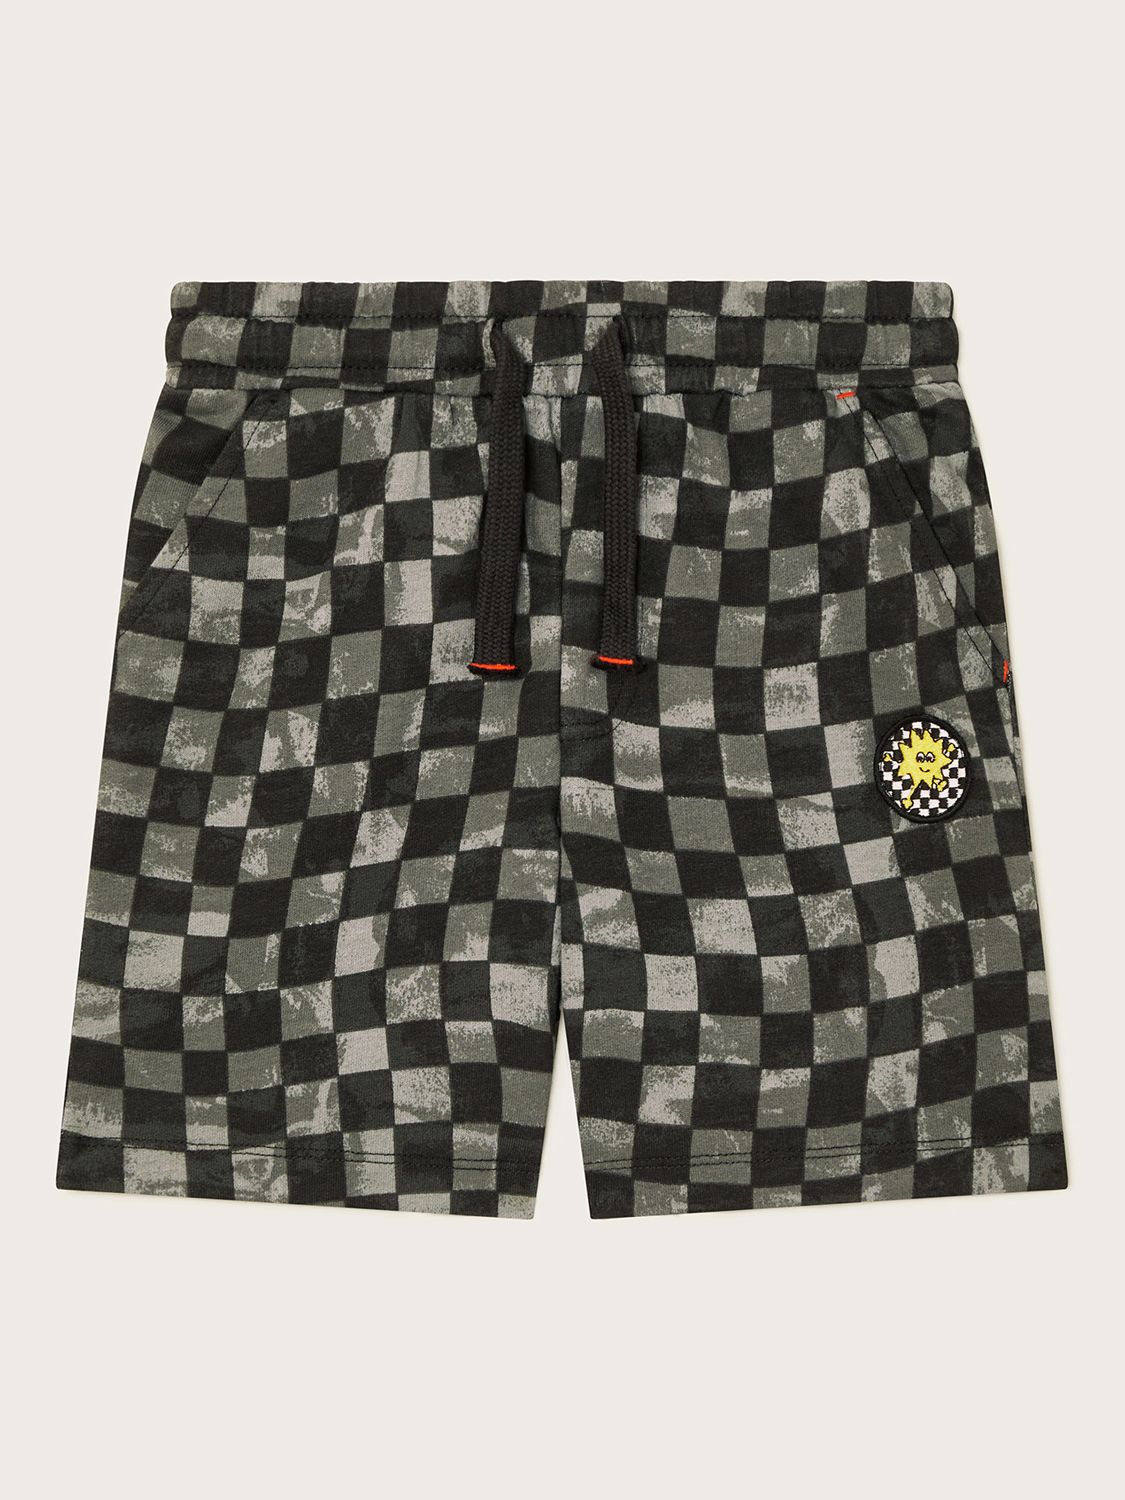 Monsoon Kids' Checkerboard Drawstring Shorts, Black/Multi, 3-4 years